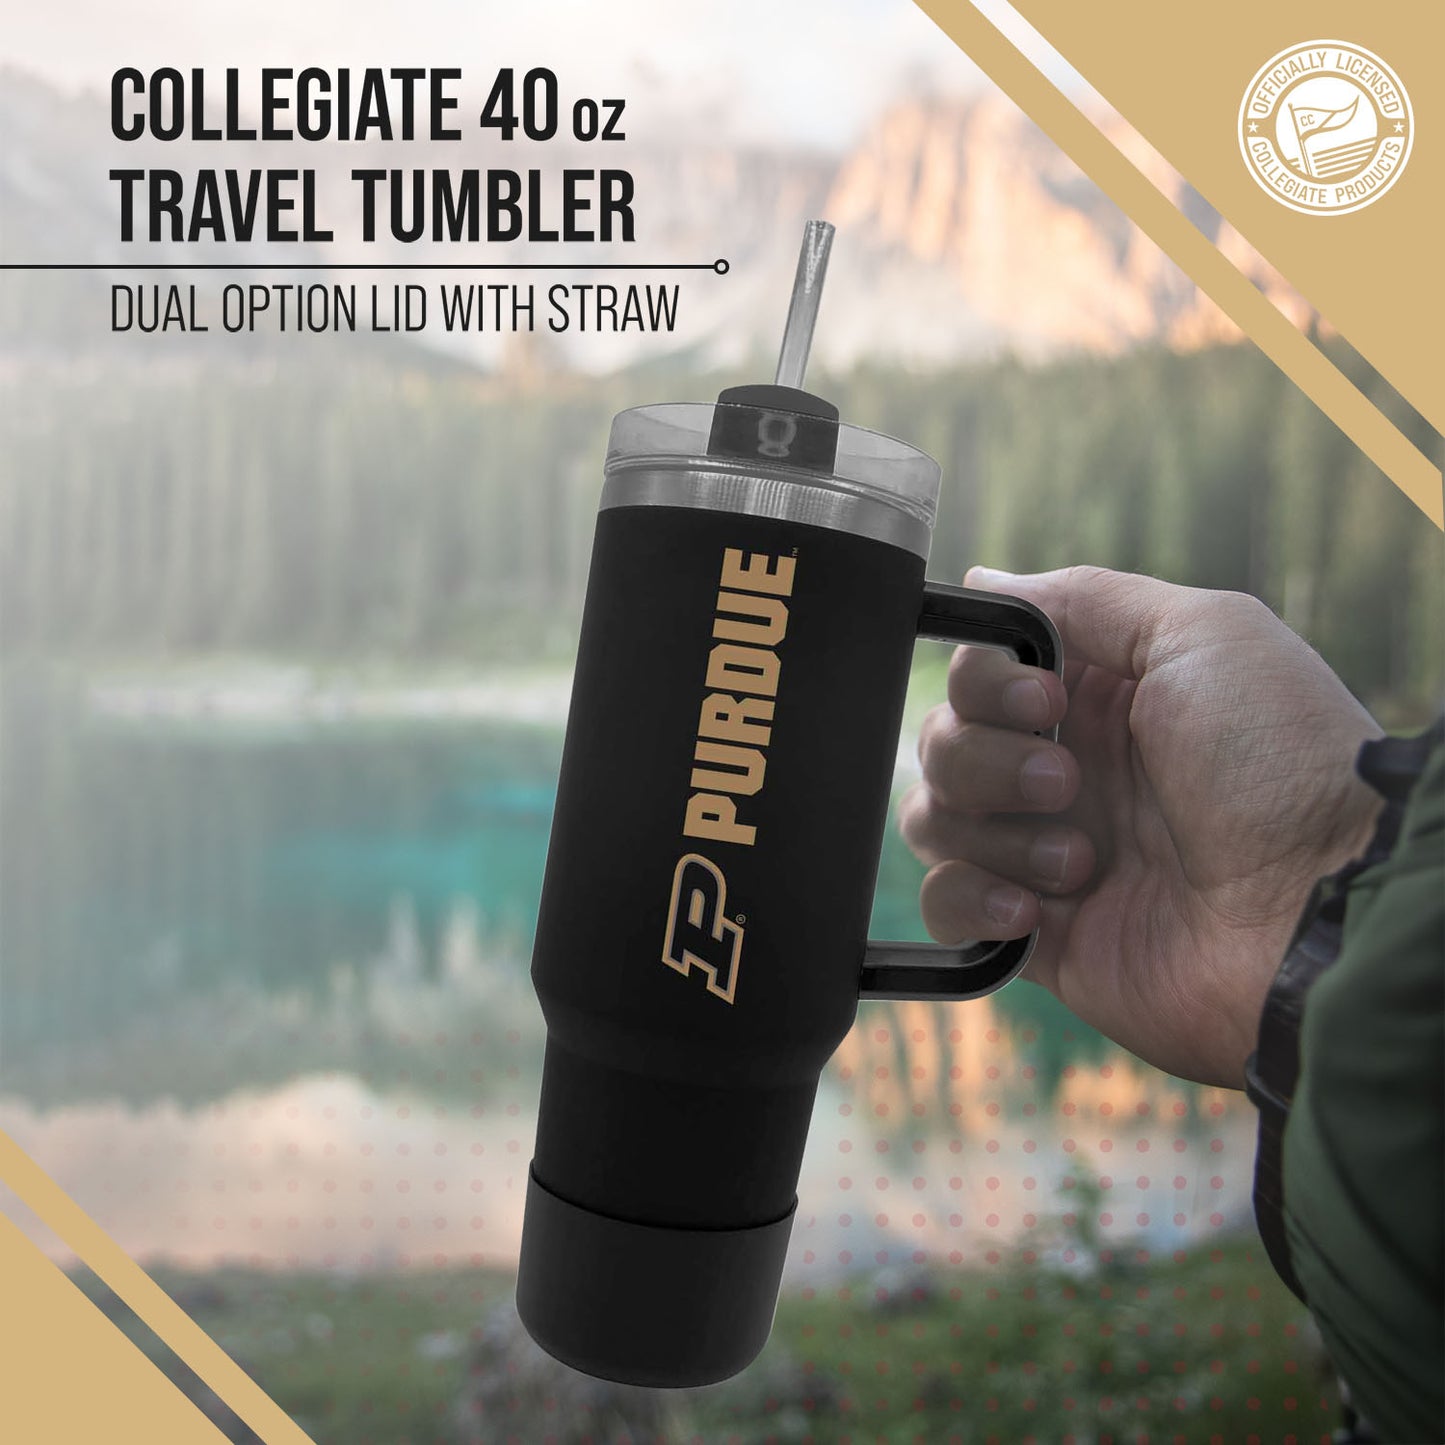 Purdue Boilermakers College & University 40 oz Travel Tumbler With Handle - Black